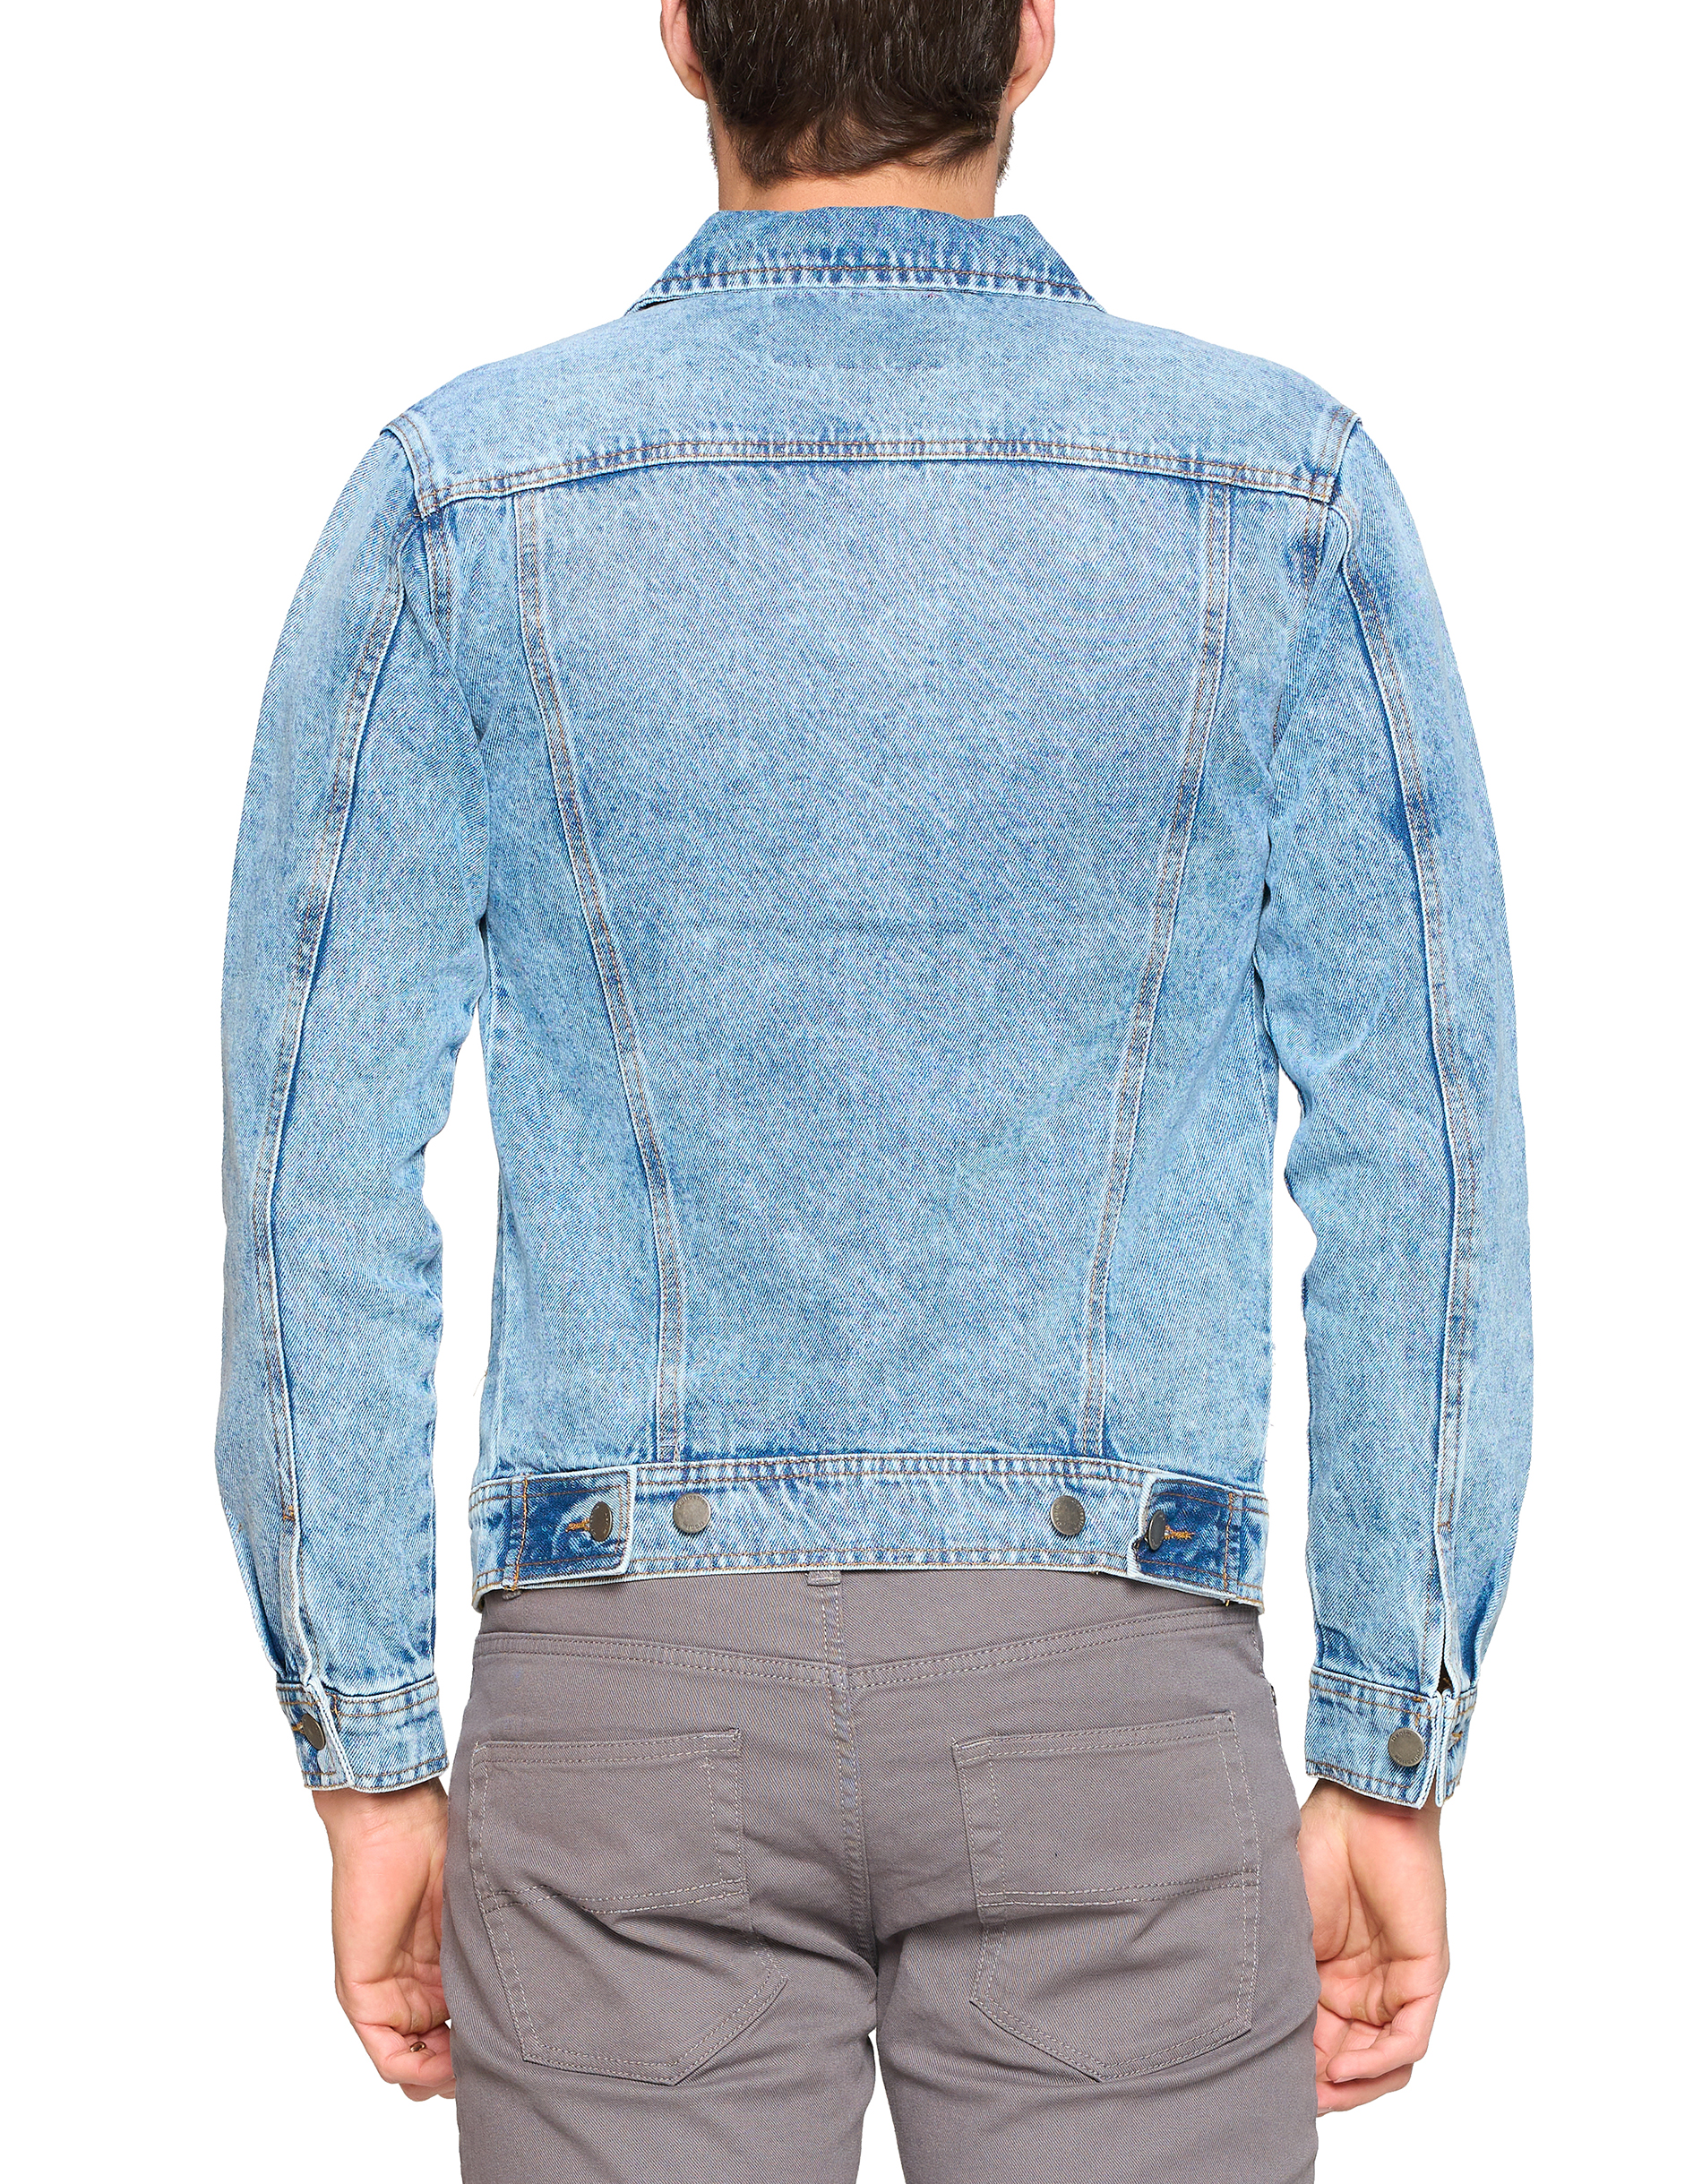 Red Label Men’s Premium Casual Faded Denim Jean Button Up Cotton Slim Fit Jacket (Light Blue, L) - image 5 of 7